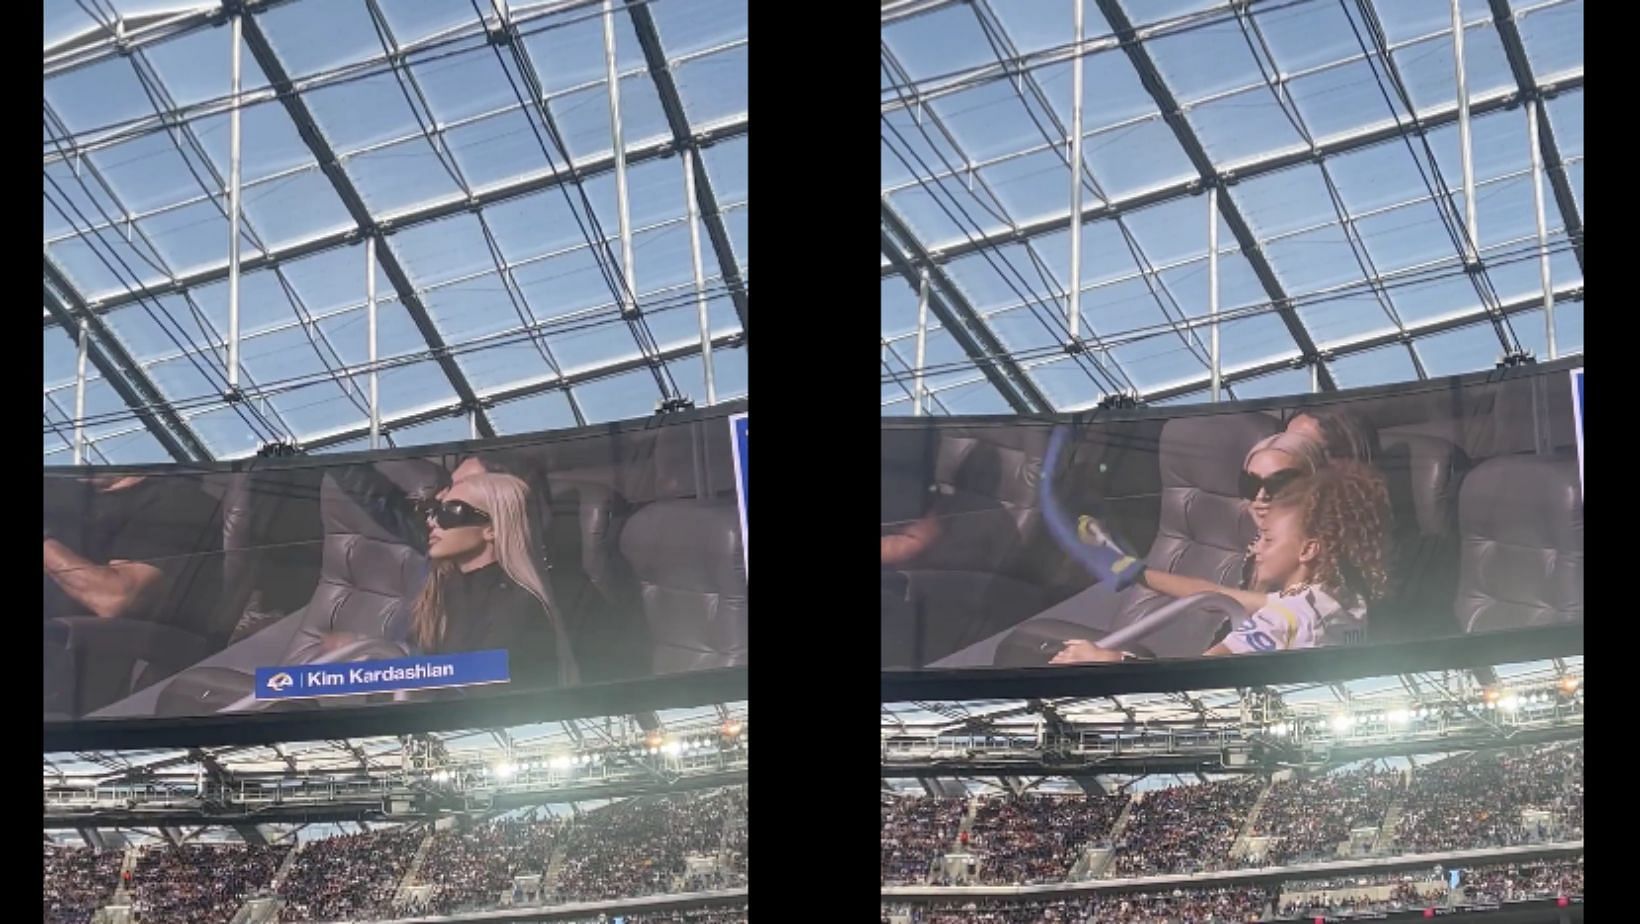 Media personality Kim Kardashian at Cowboys-Rams game. Source: @natashadye (Twitter)